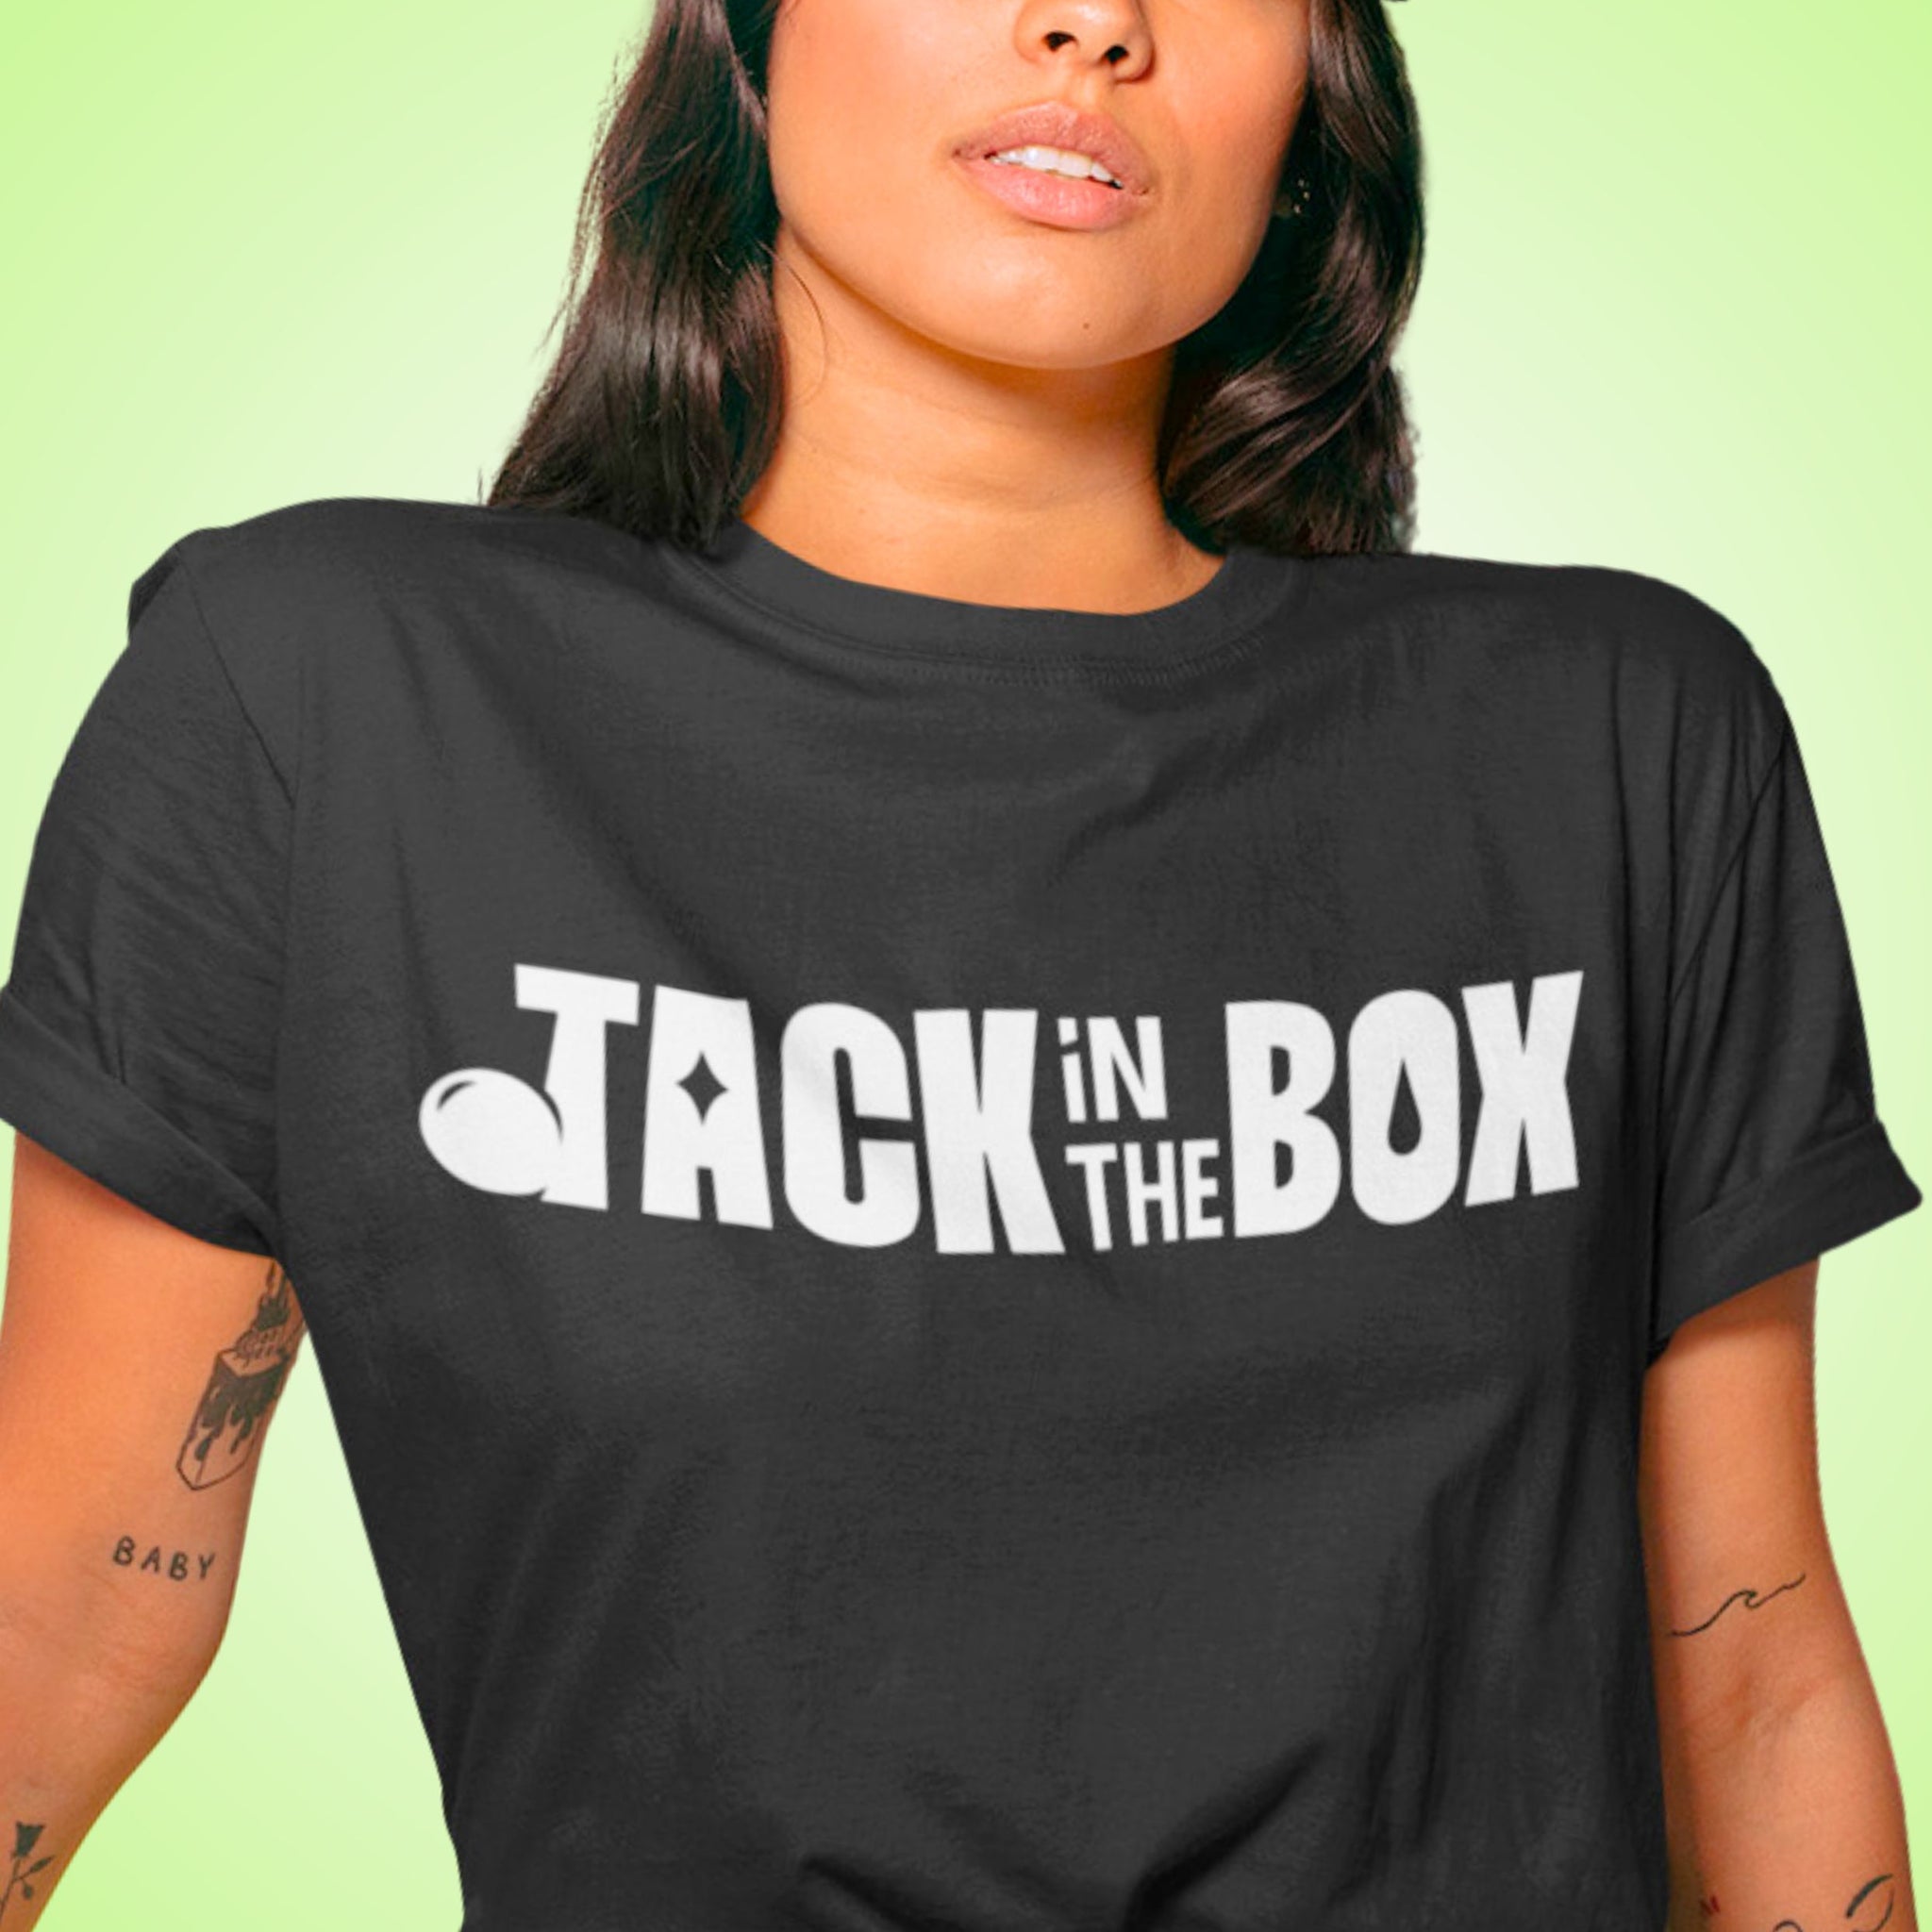 Jhope - Jack In The Box Logo Unisex Tshirt